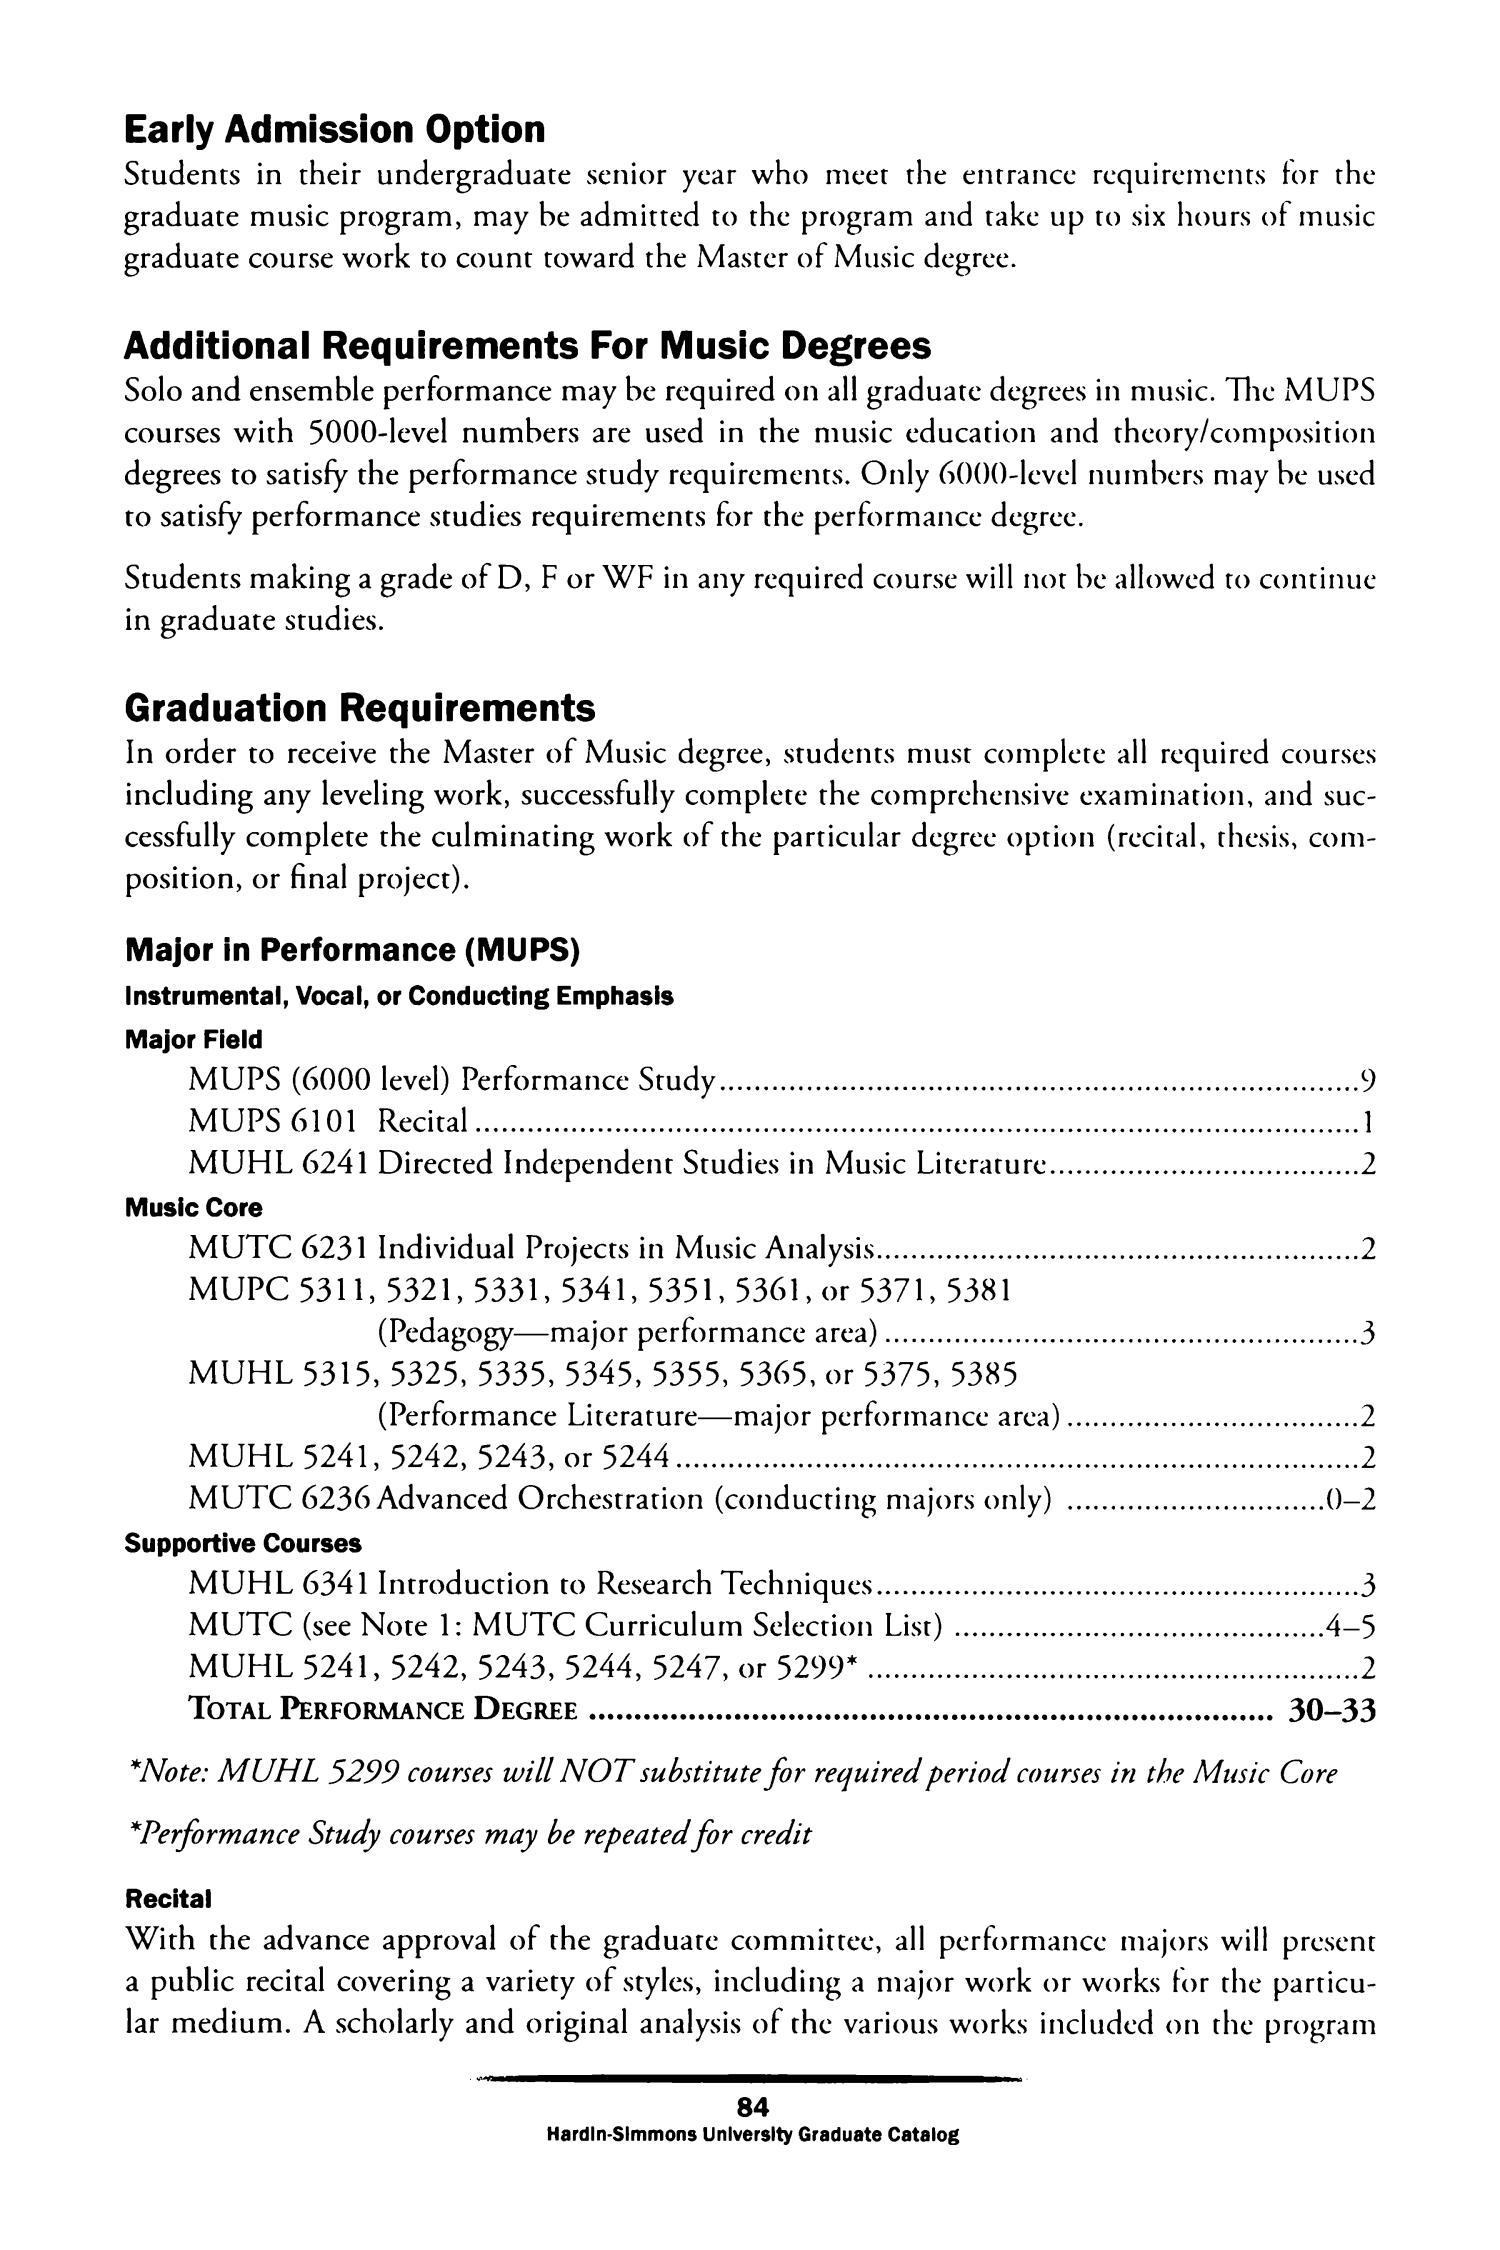 Catalog of Hardin-Simmons University, 2008-2009 Graduate Bulletin
                                                
                                                    84
                                                